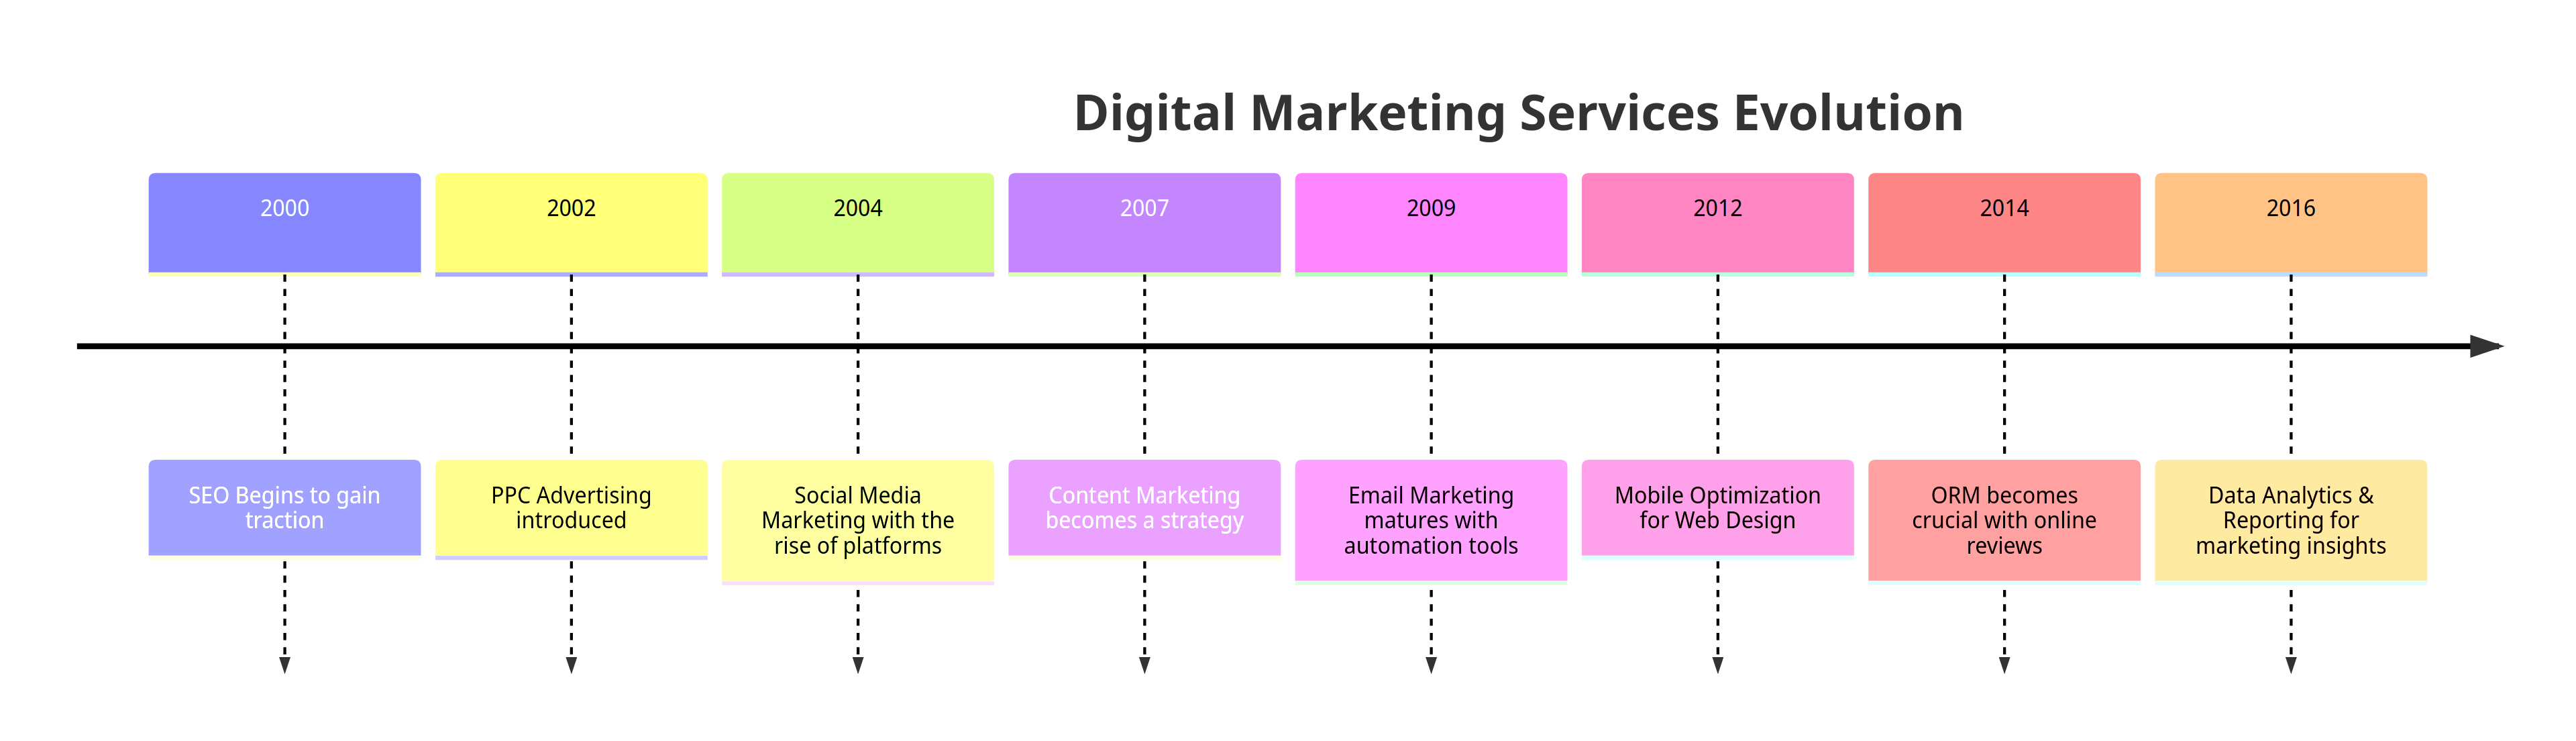 Digital Marketing Services Evolution